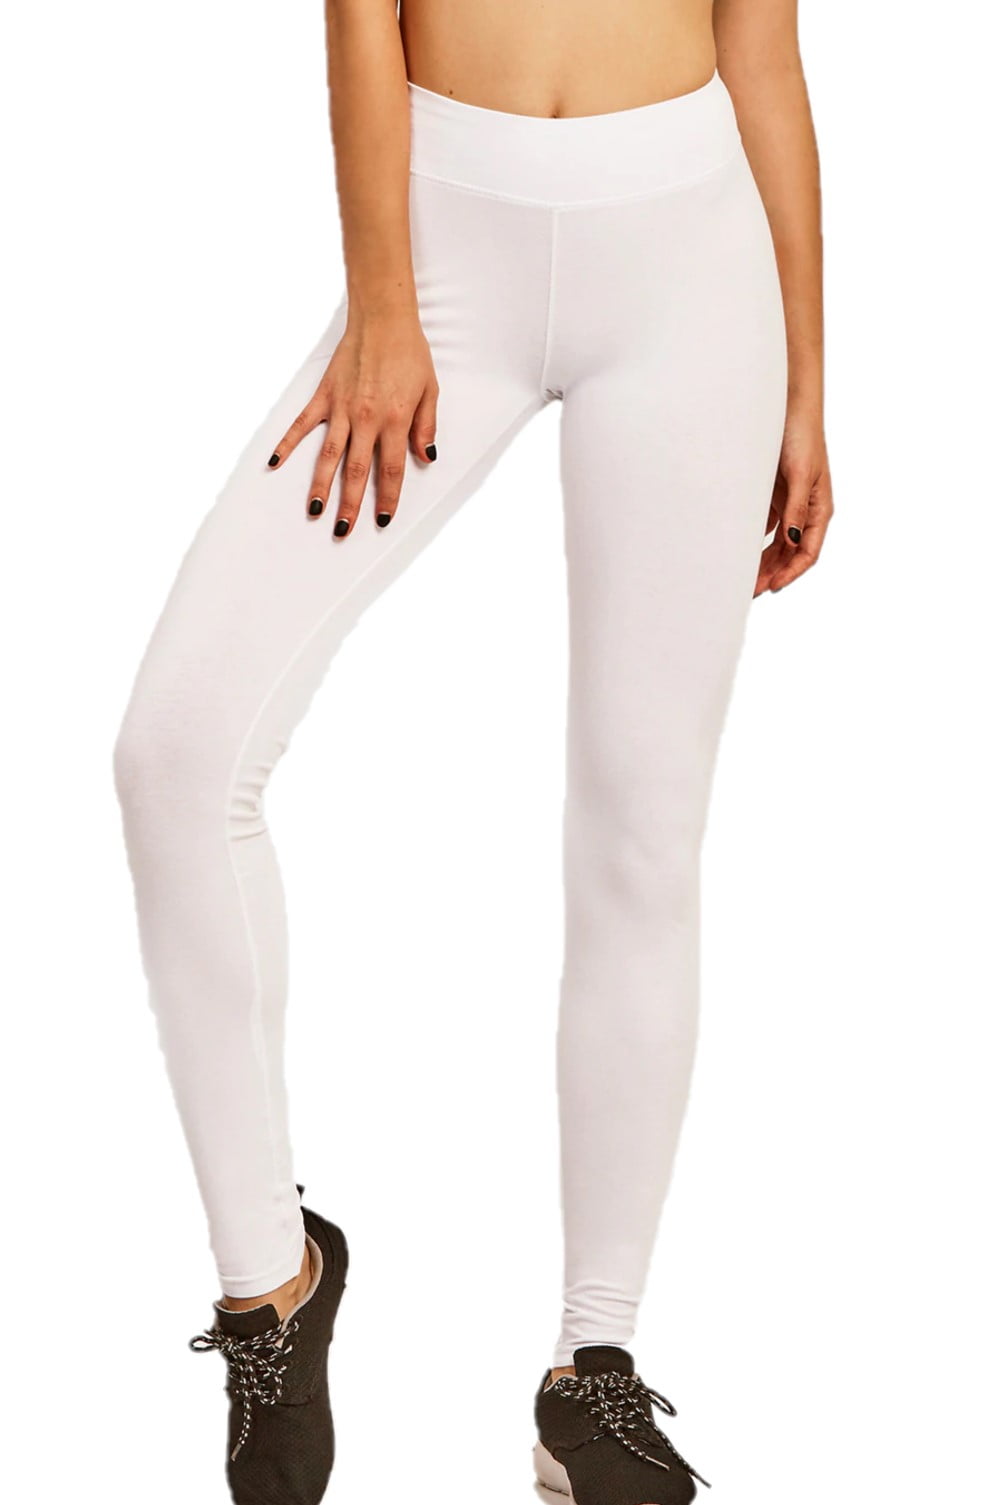 Shop Prisma's White Kurti Pants for a Stylish Look